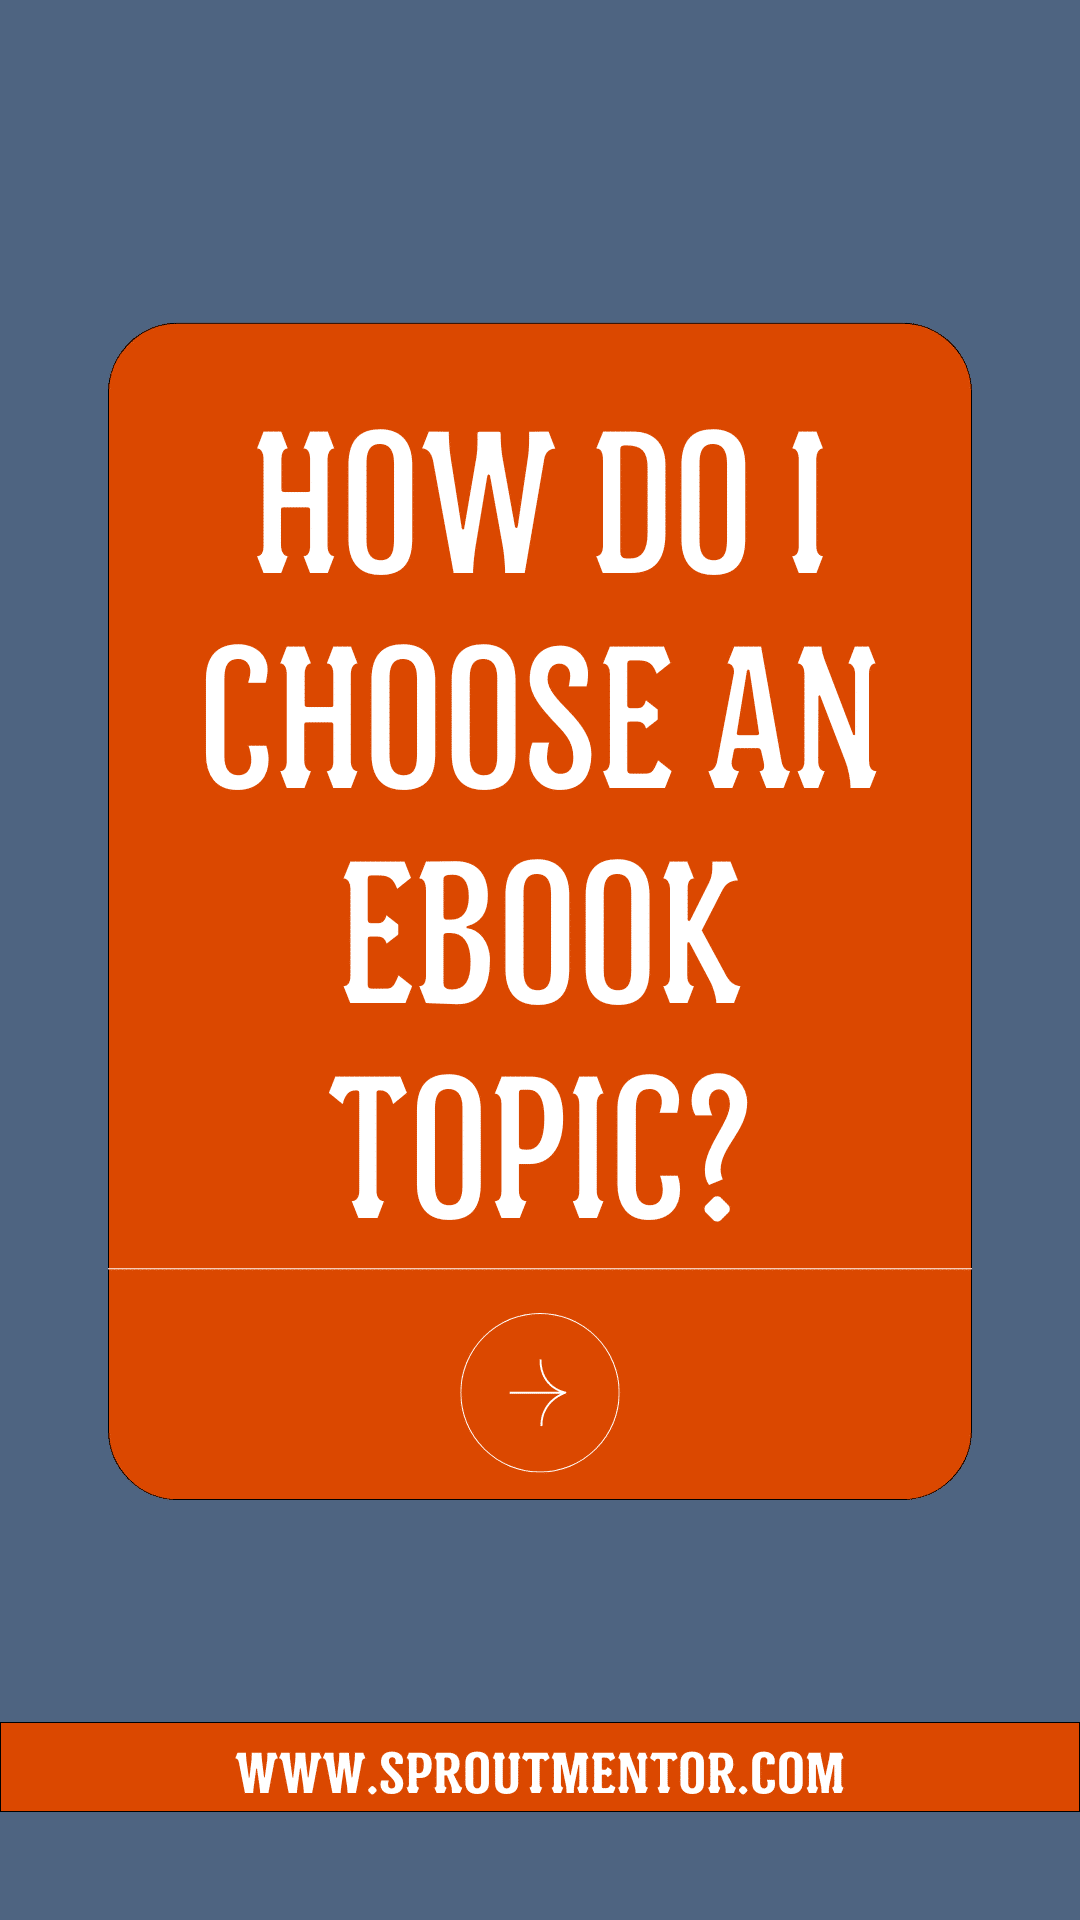 How Do I Choose an eBook Topic?